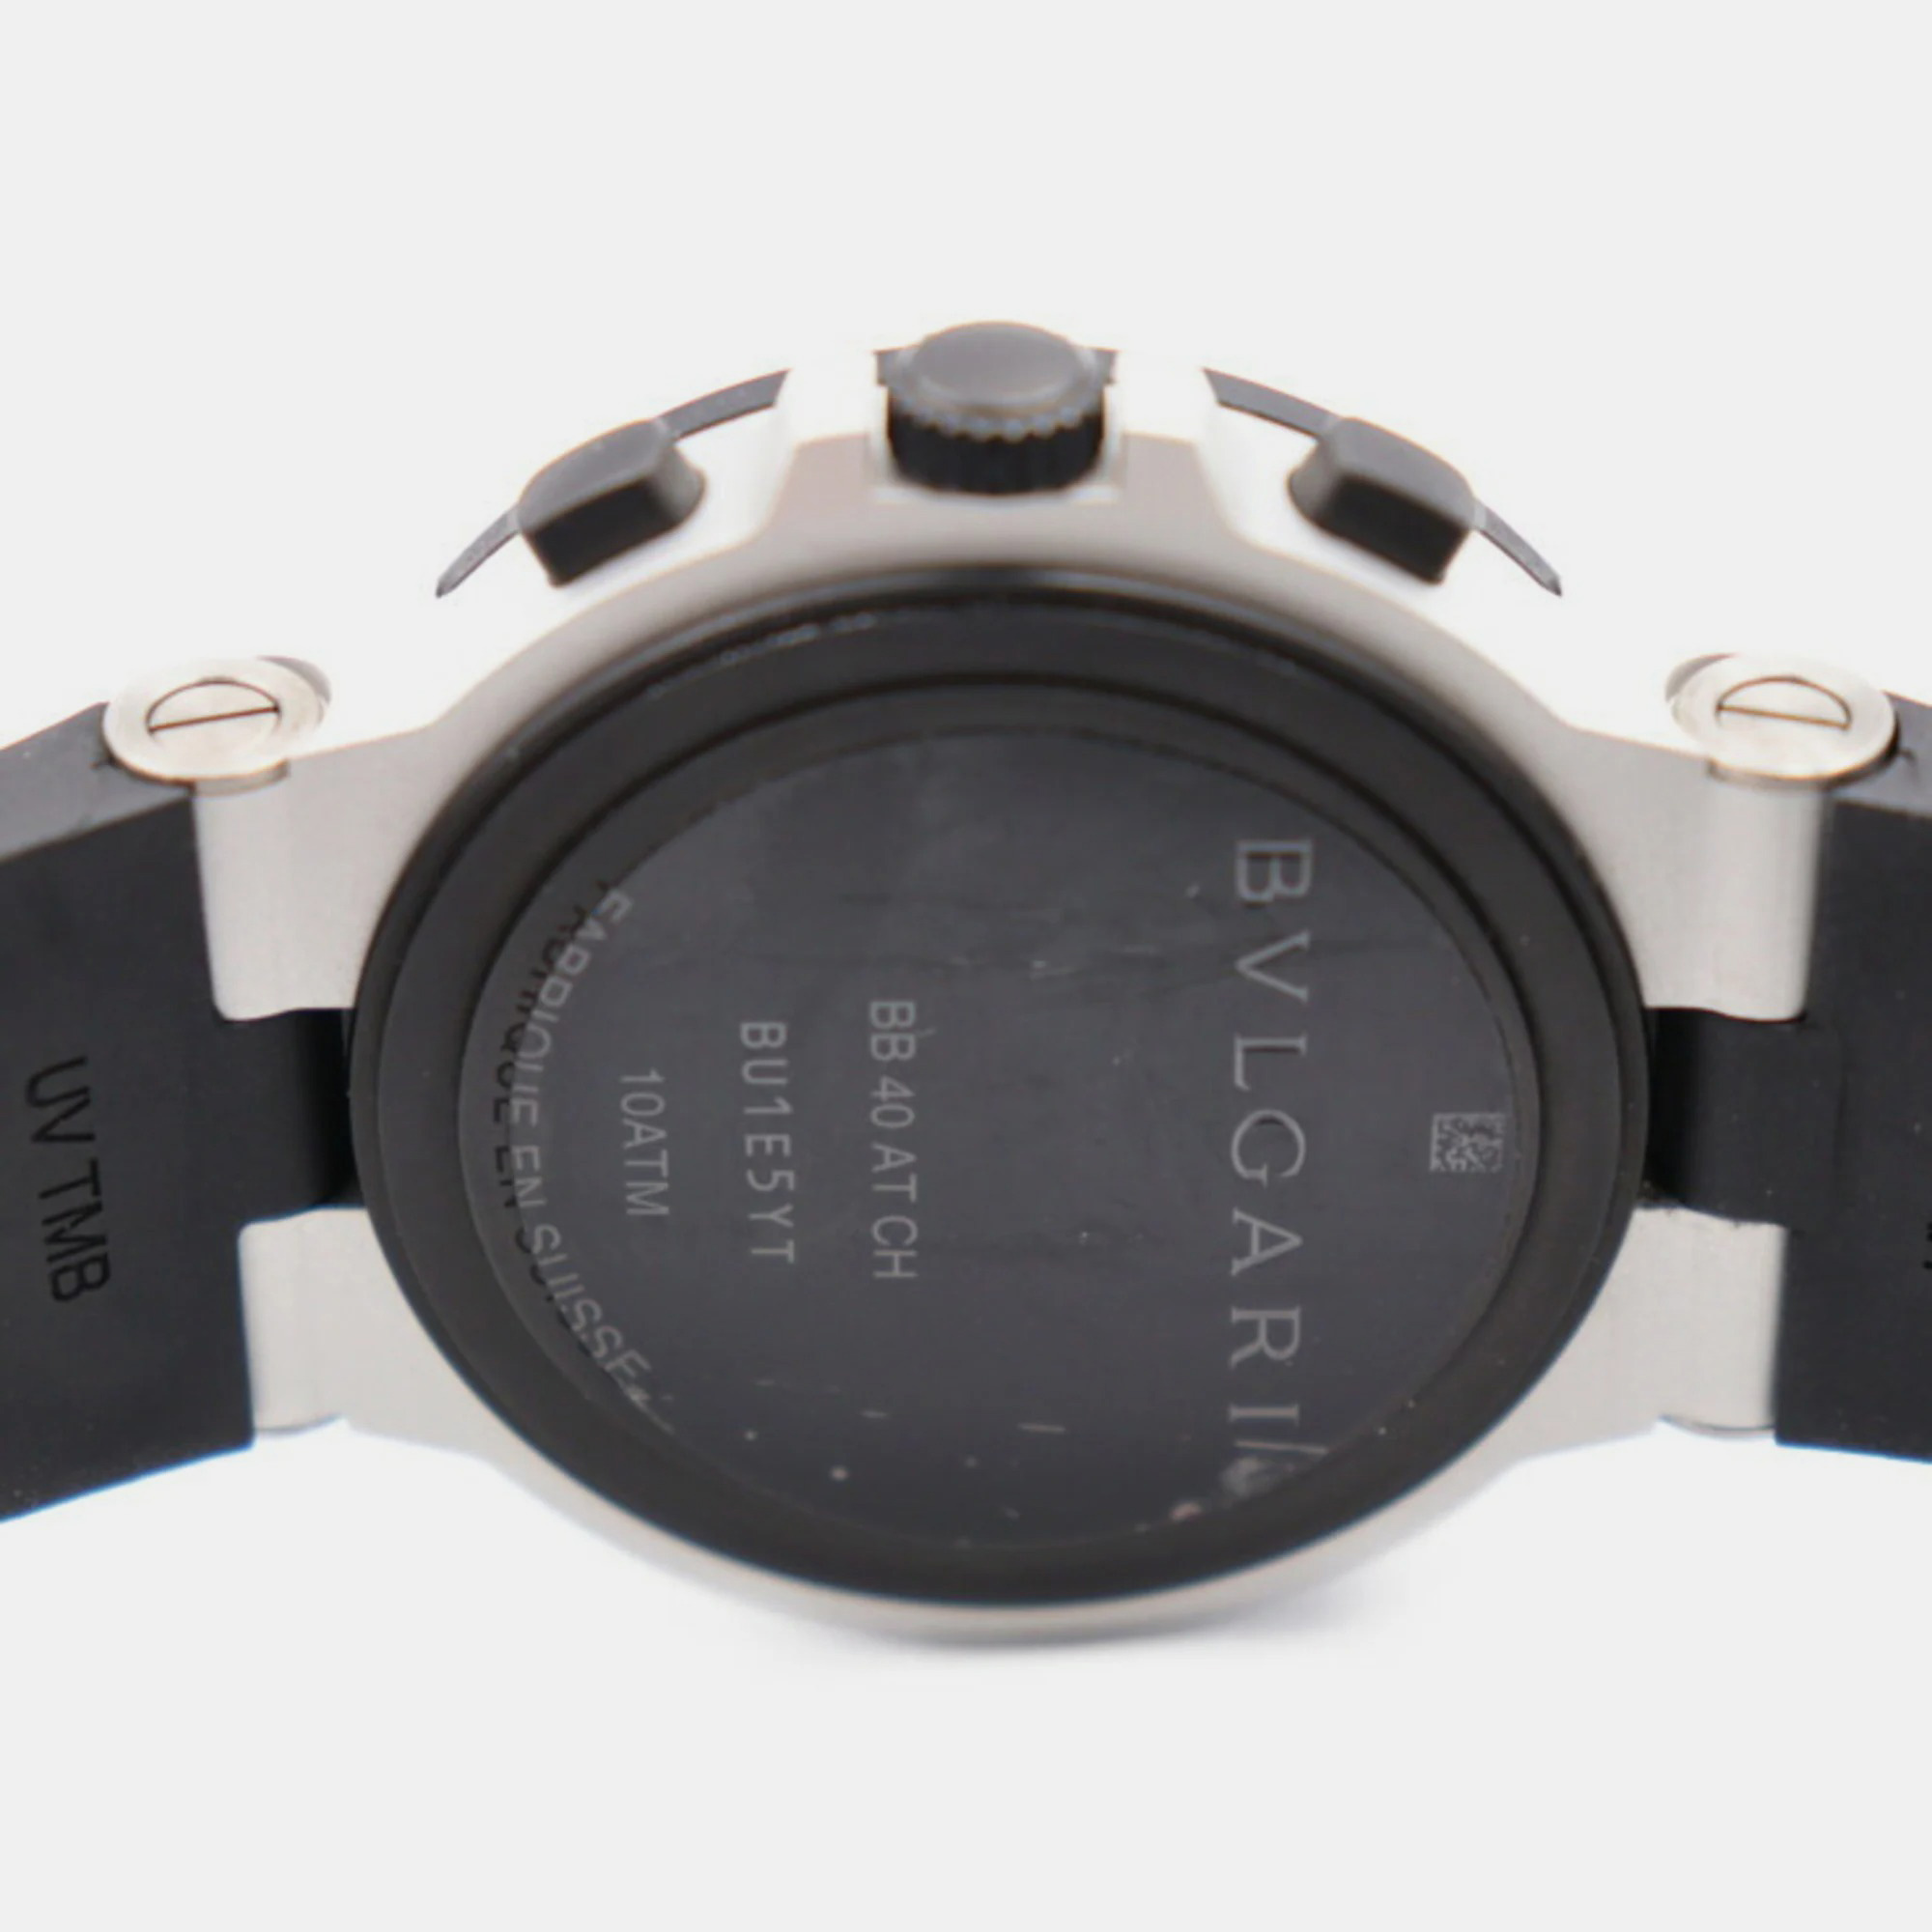 Bvlgari Silver Titanium Aluminum BB40ATCH Automatic Men's Wristwatch 40 Mm